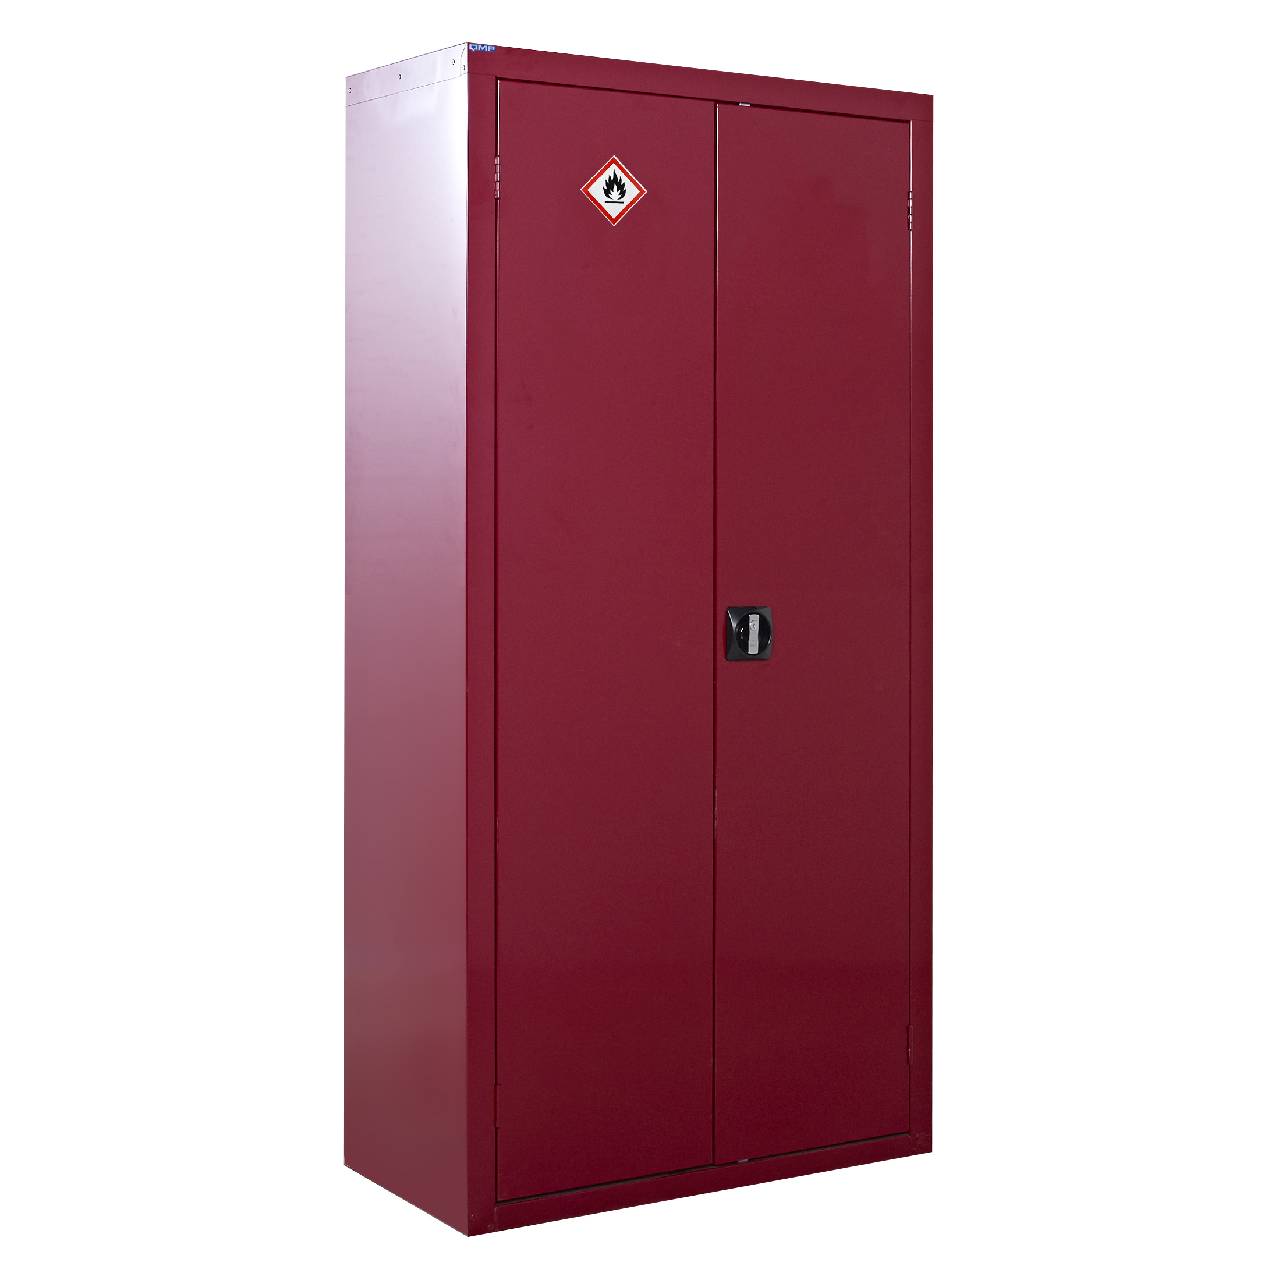 QMP Flammable Liquids Floor Standing Cabinets - 1800H x 900W x 460D mm